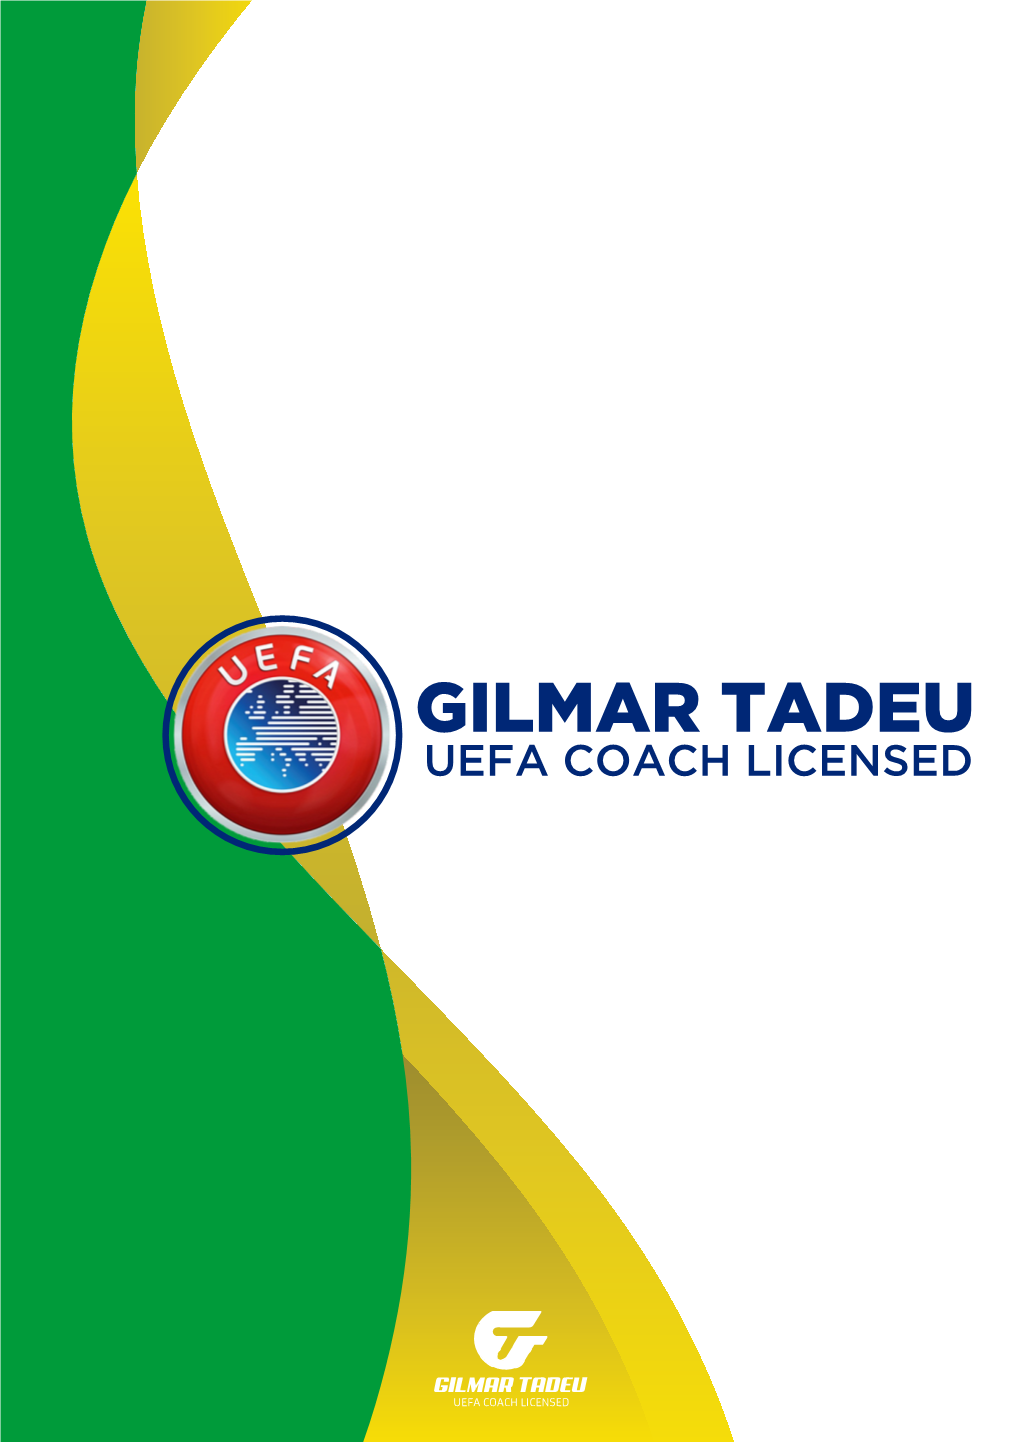 GILMAR TADEU UEFA COACH LICENSED Name: Gilmar Tadeu Da Silva D.O.B: 18/Nov/1970 Nationality: Brazilian